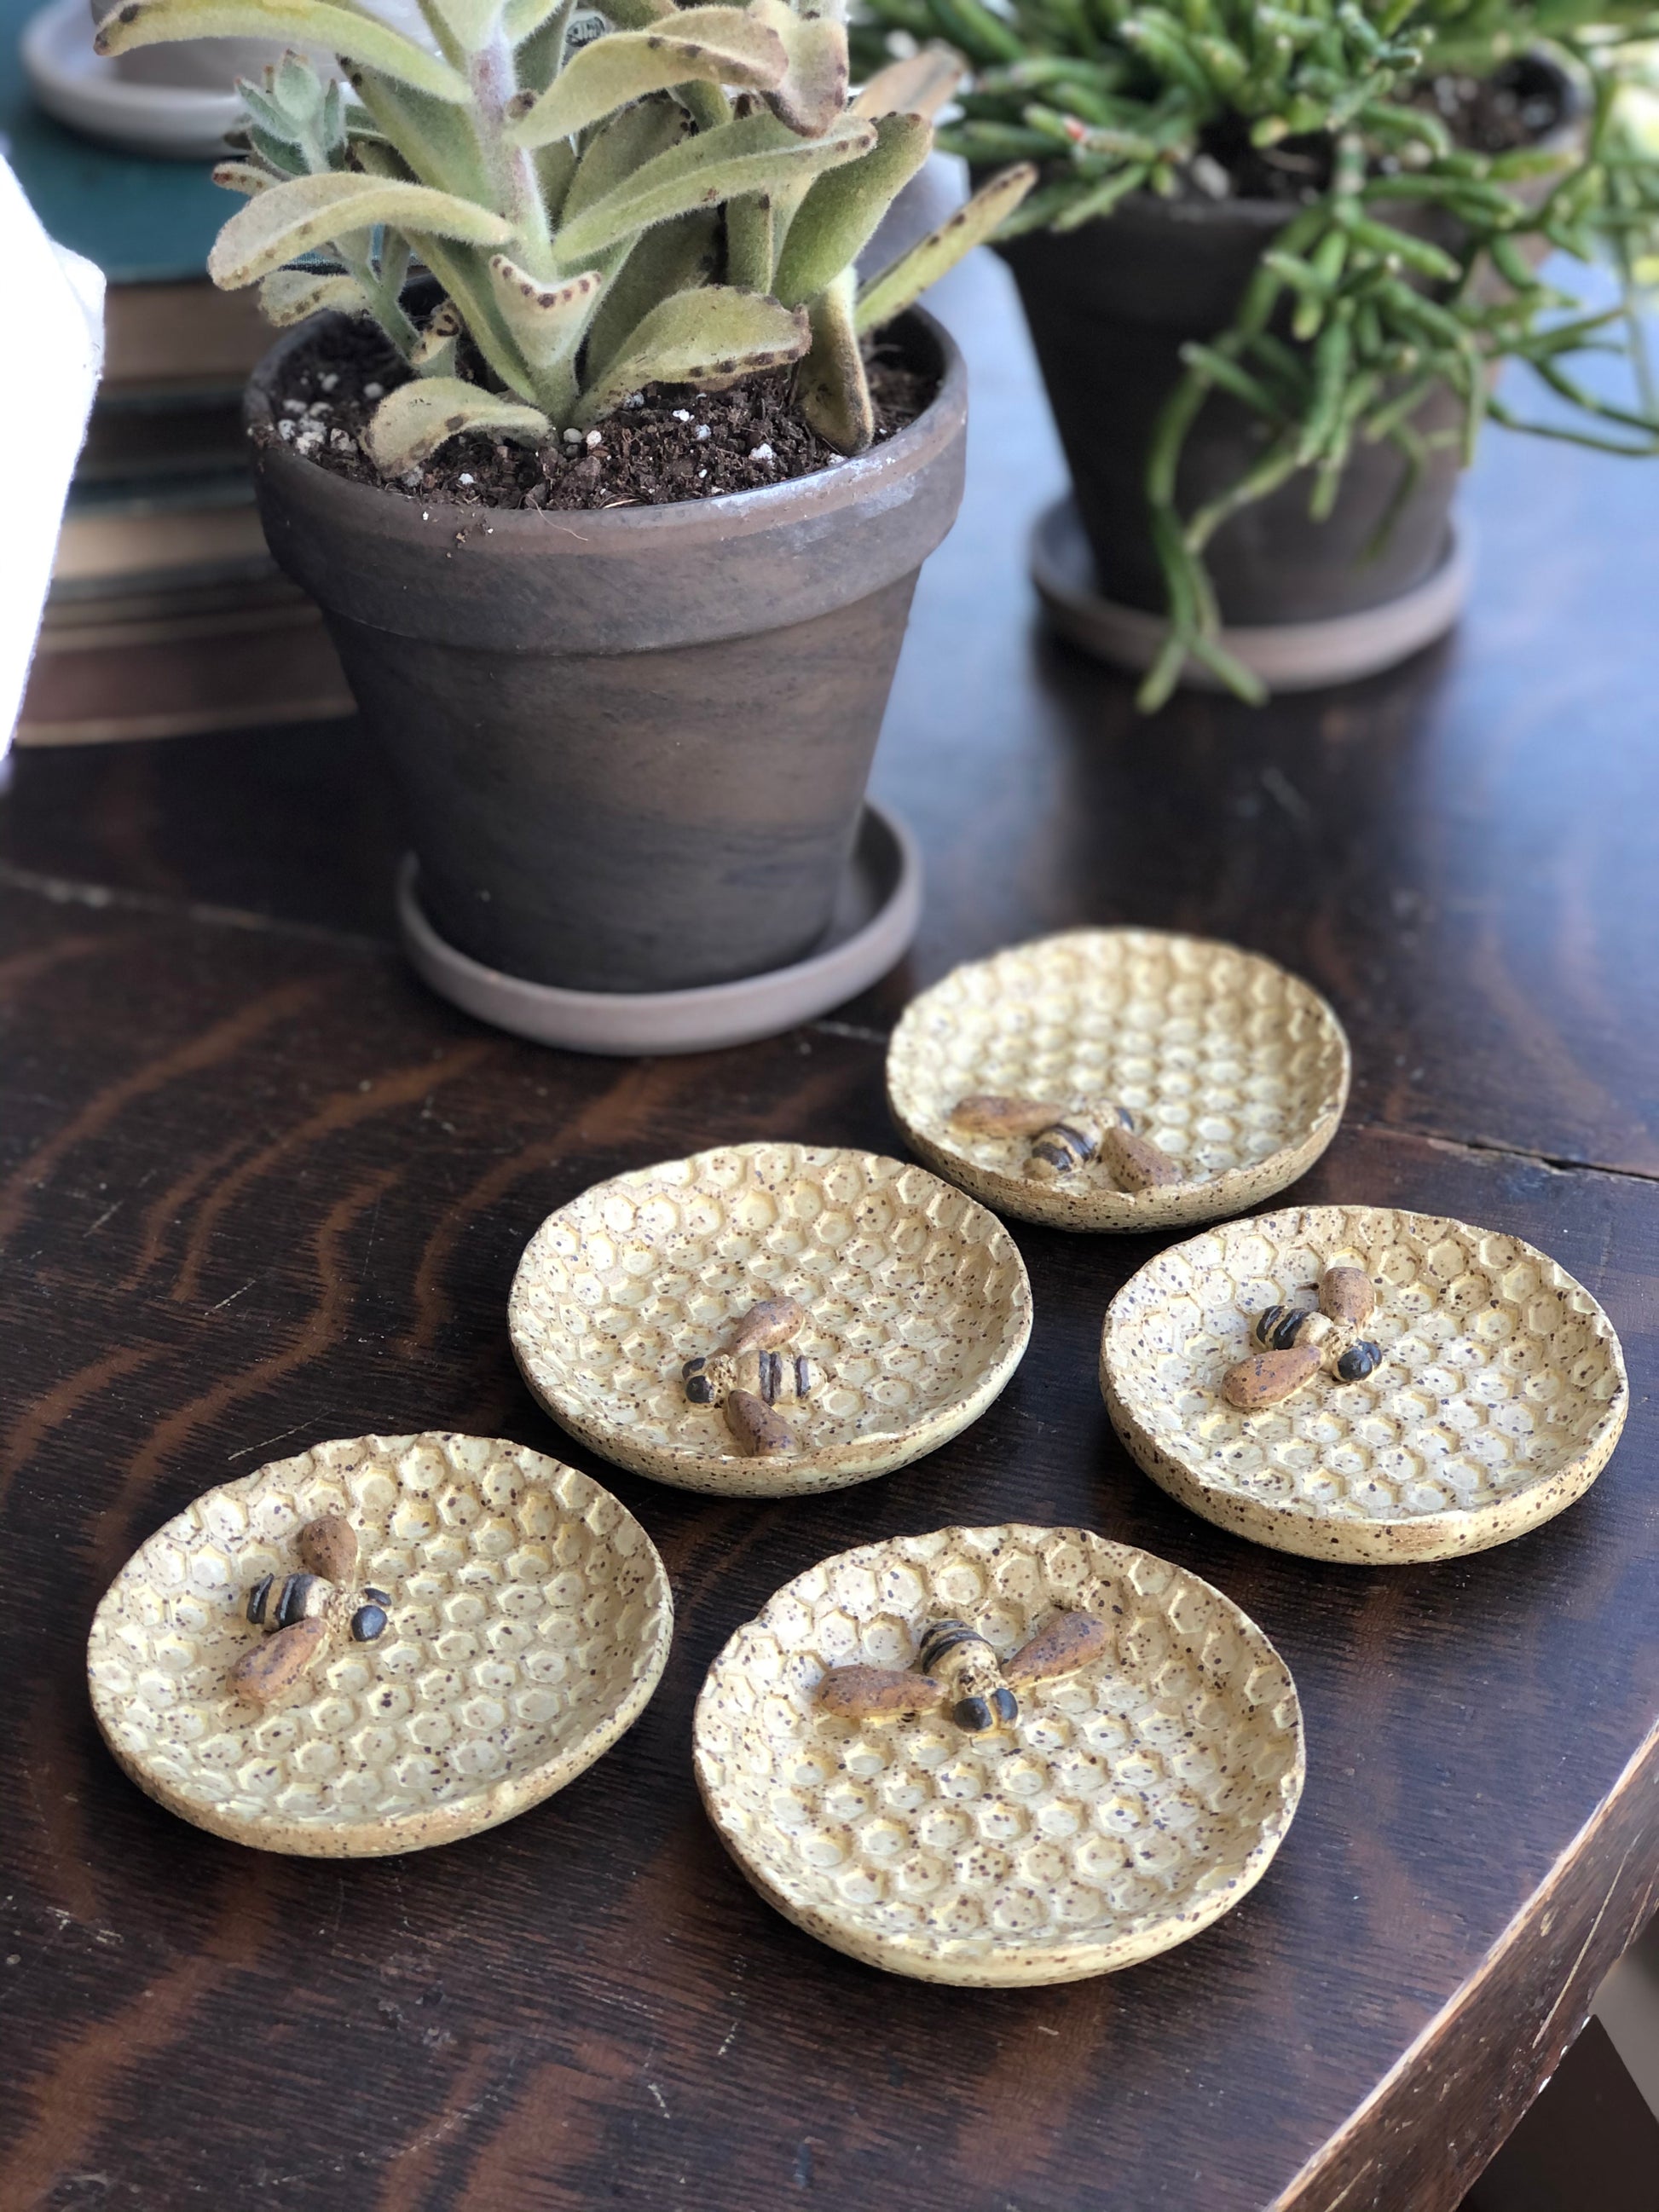 Handmade Stationery Set — THE BEE COMMUNITY